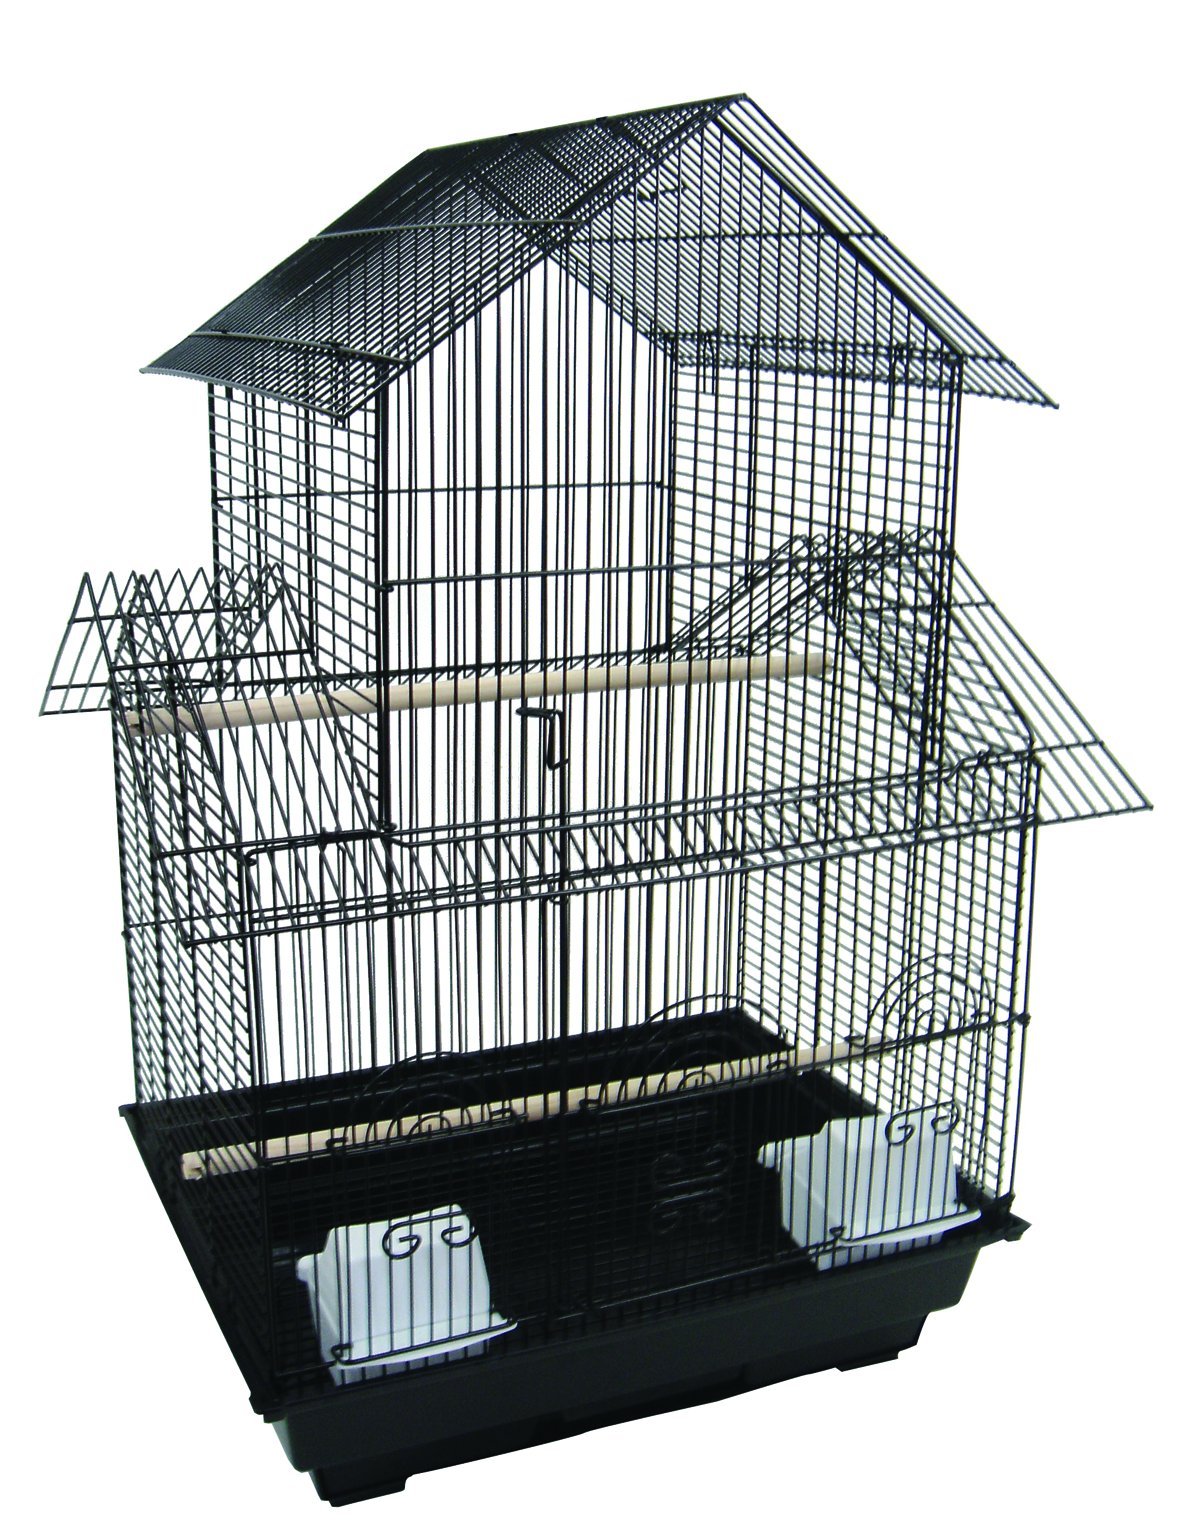 YML A5844 3/8" Bar Spacing Pagoda Small Bird Cage, Black, 18" x 14"